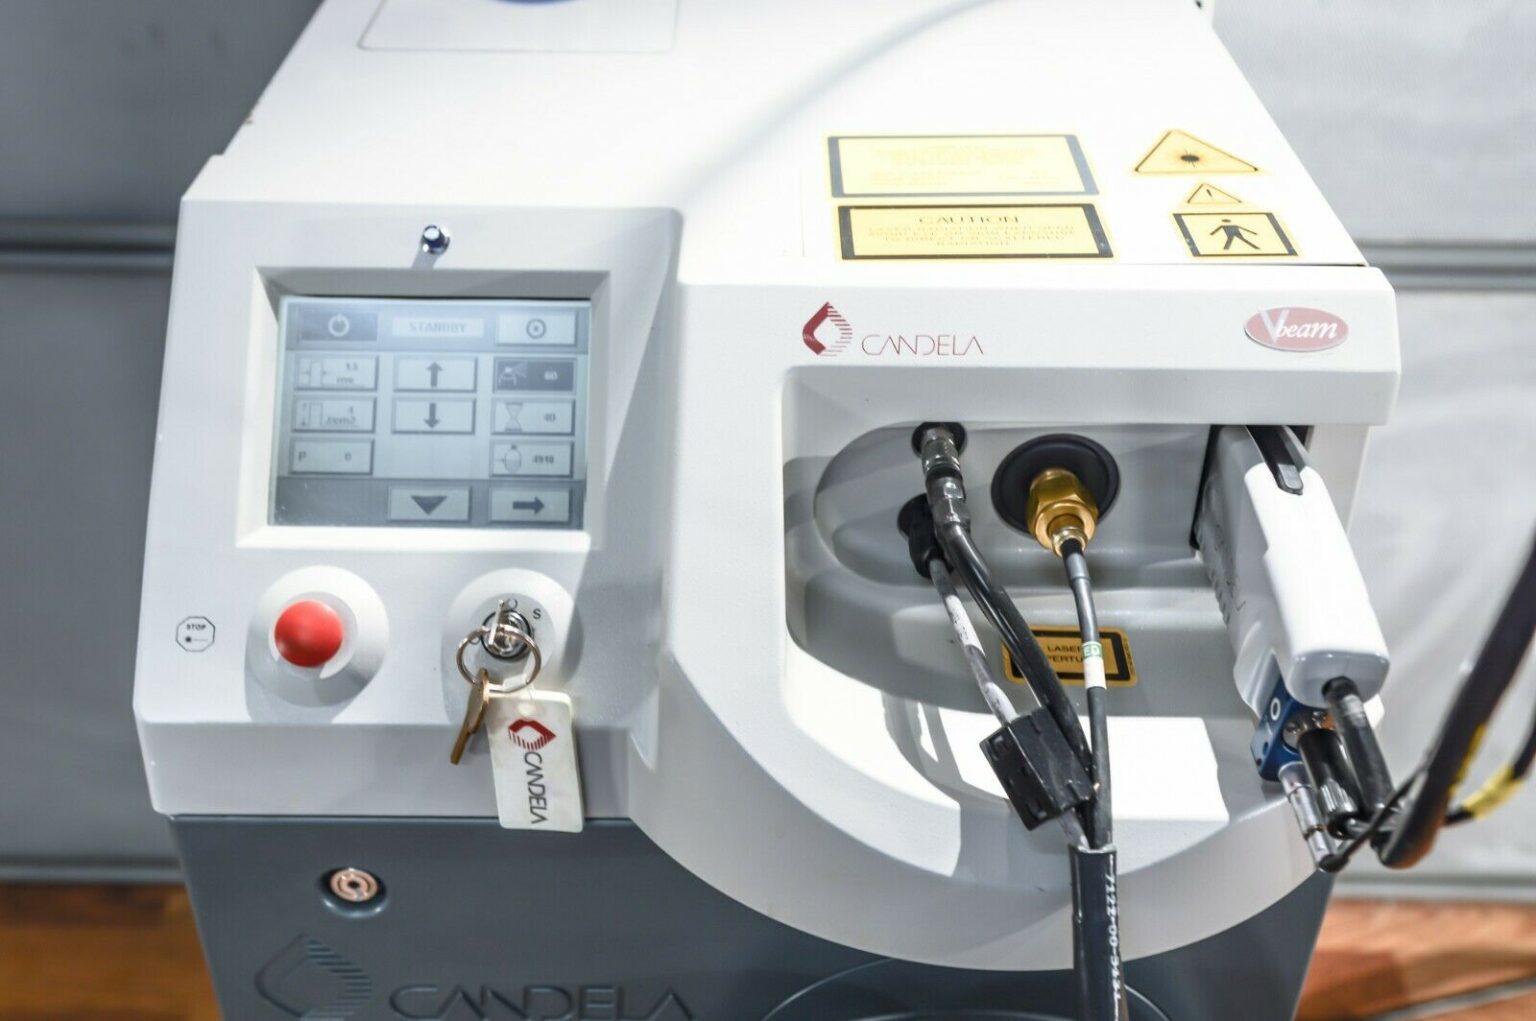 Candela VBeam Pulsed Dye Laser Pinnacle Medical Equipment